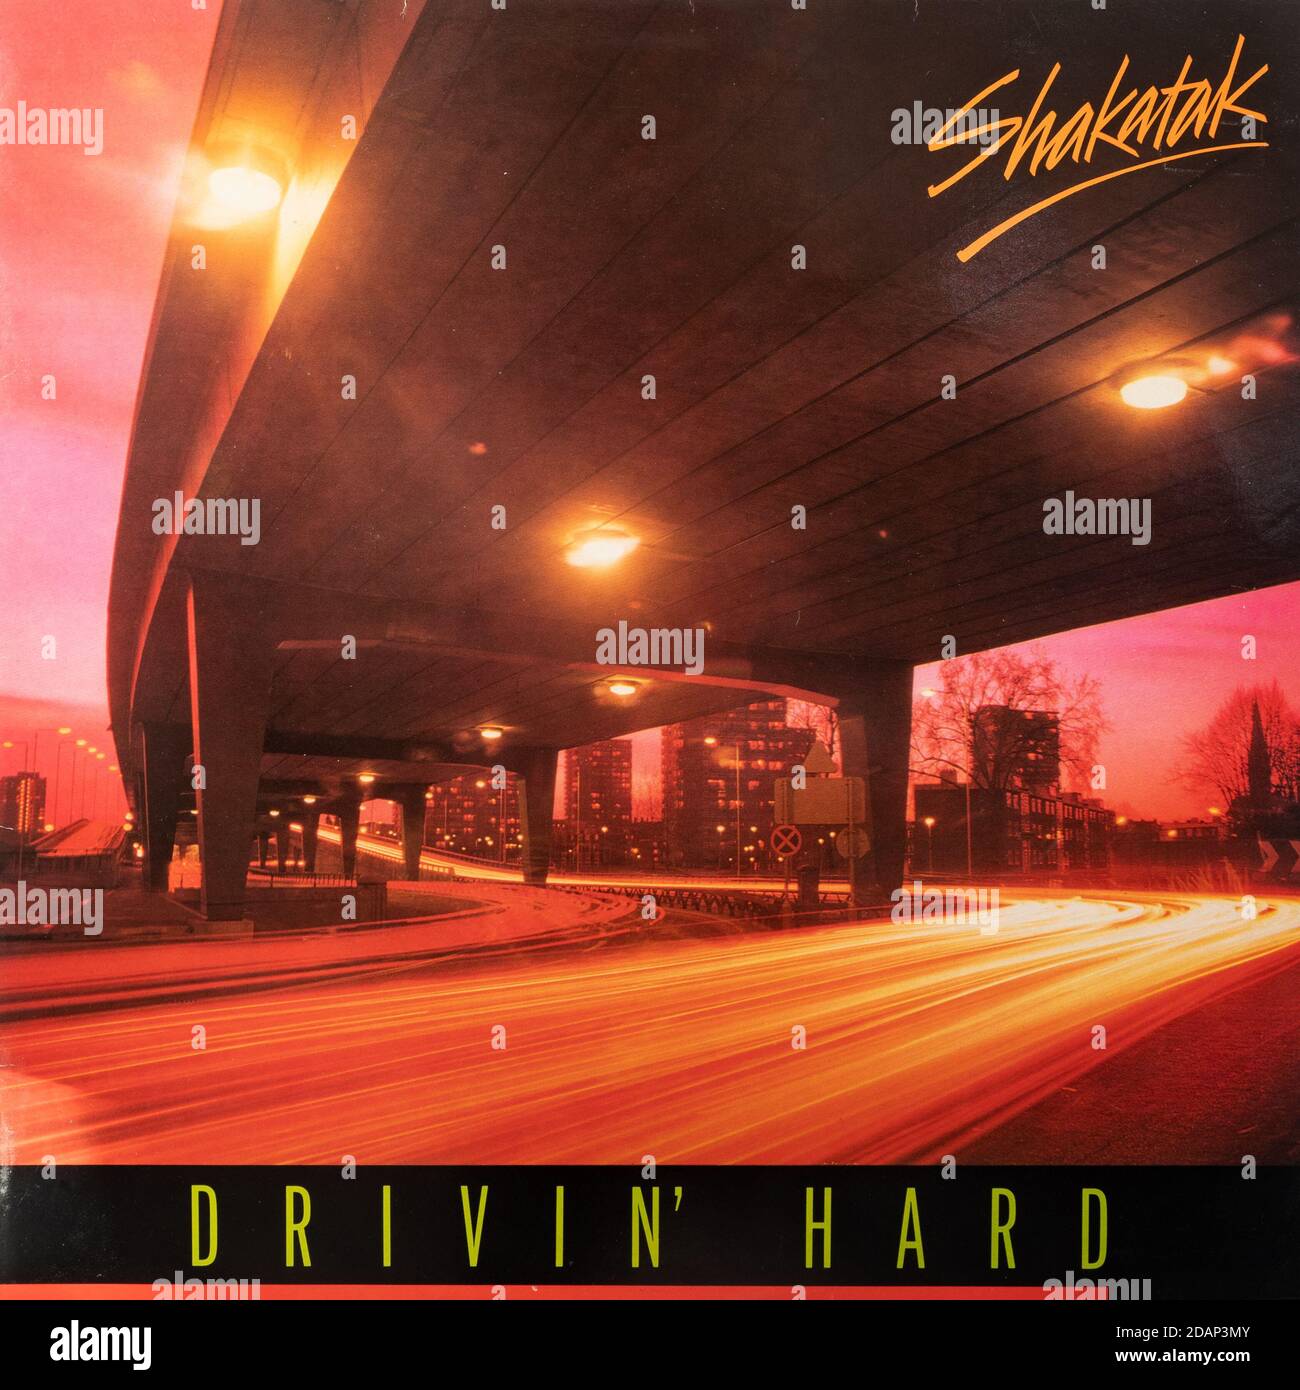 Shakatak Drivin' Hard, vinyl LP record album cover Stock Photo